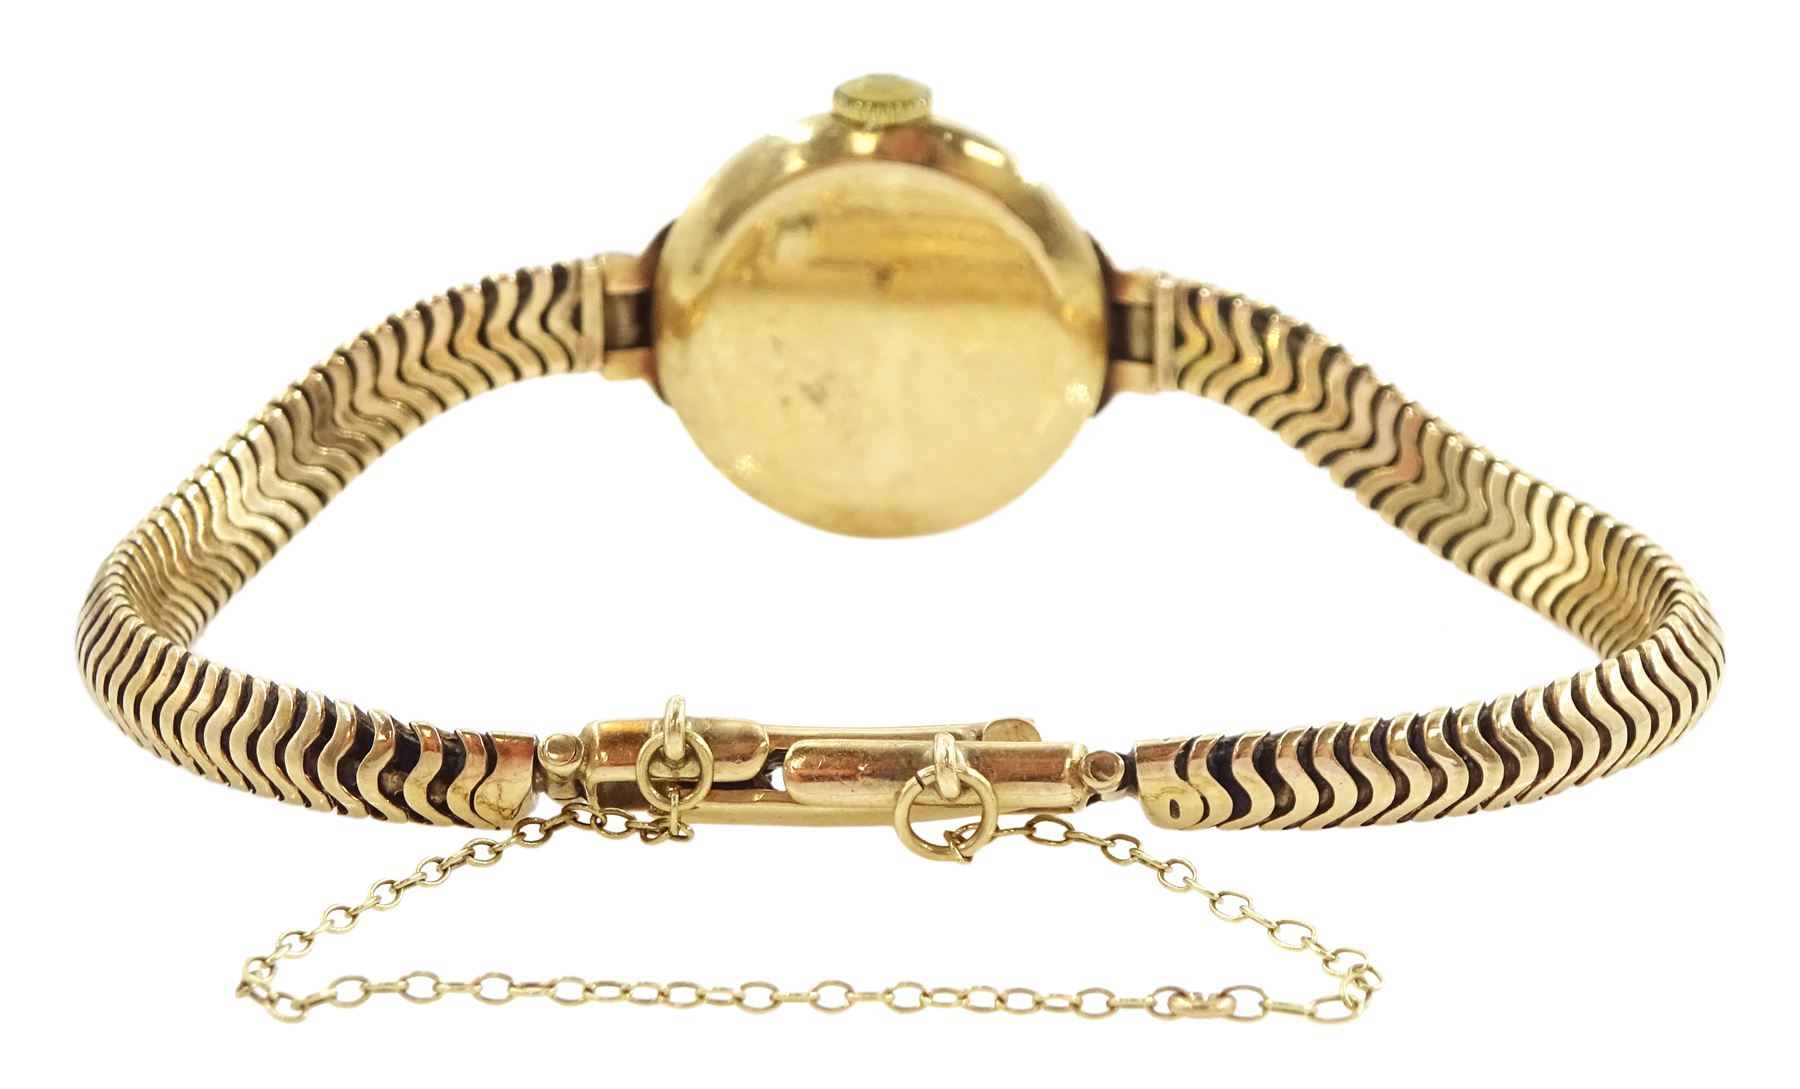 Omega ladies 9ct gold manual wind wristwatch - Image 2 of 2